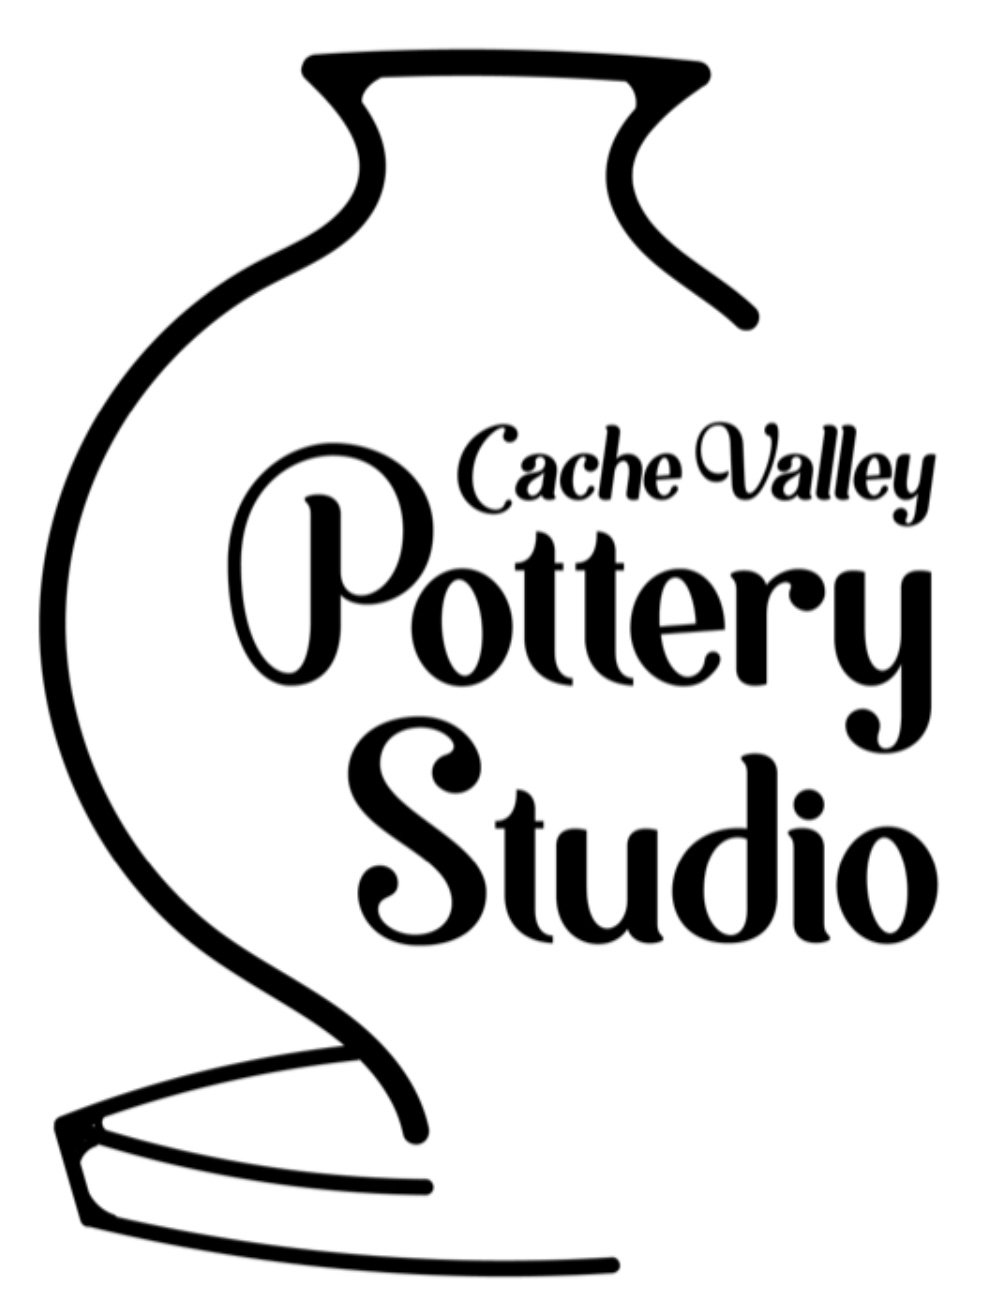 Cache Valley Pottery Studio